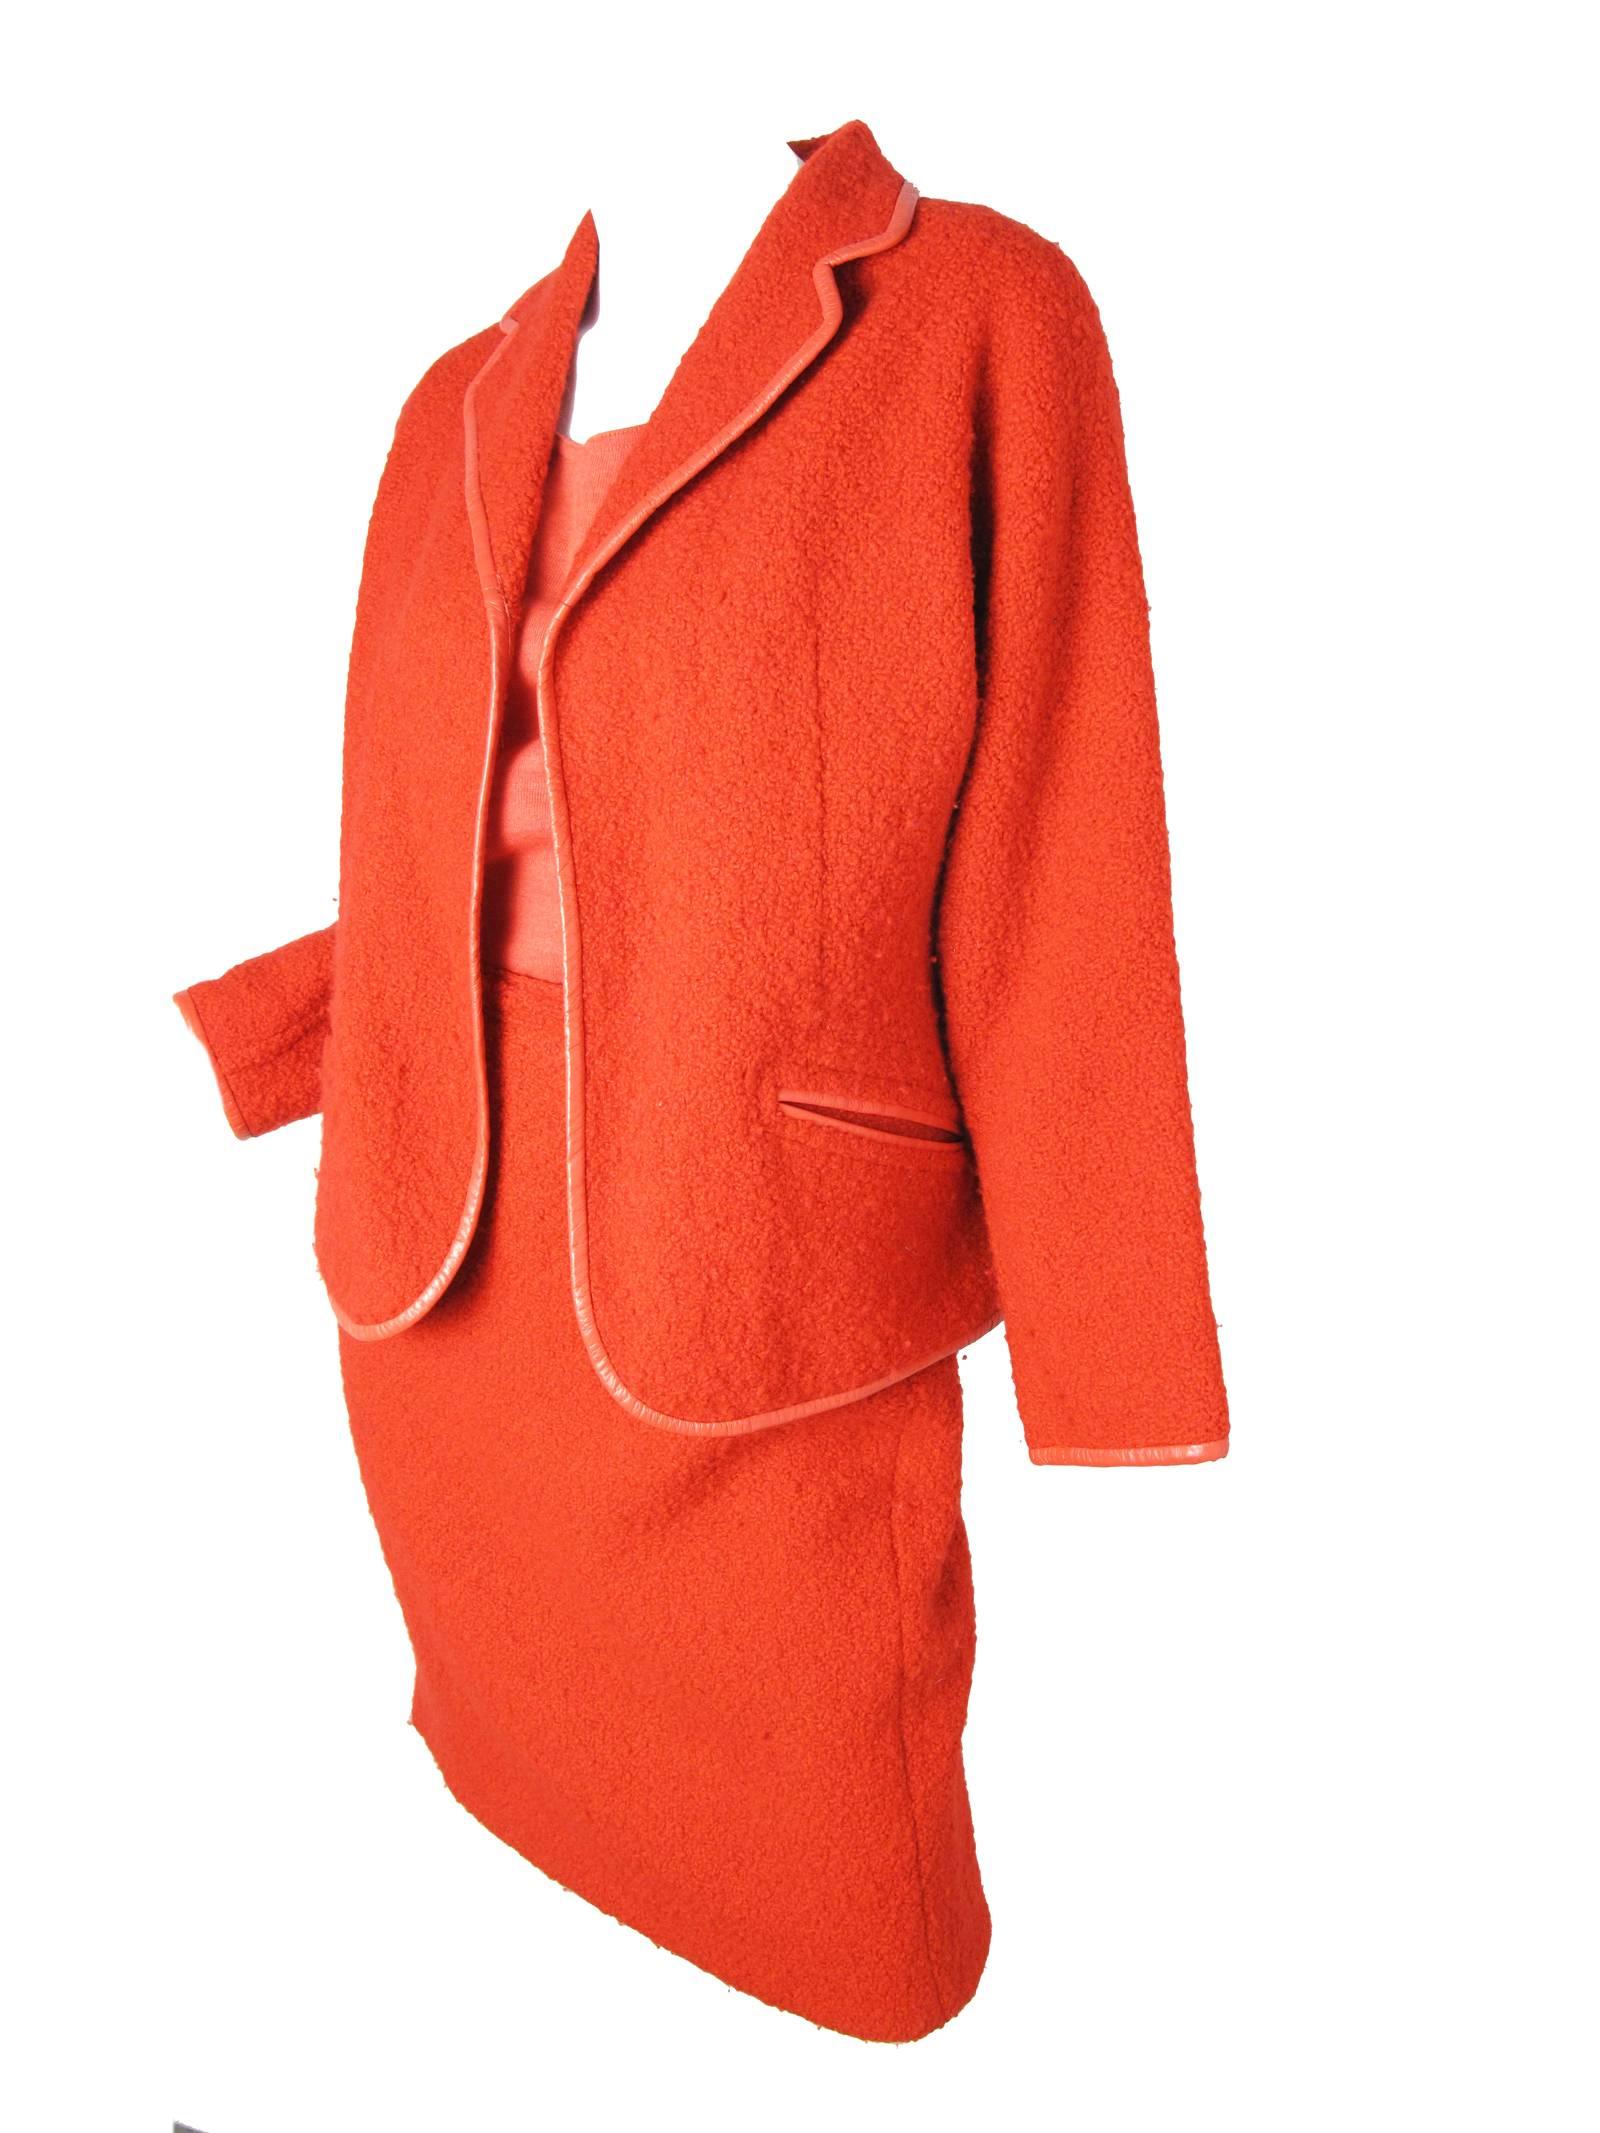 Bonnie Cashin Red Leather Trim Suit, 1960s   In Excellent Condition In Austin, TX